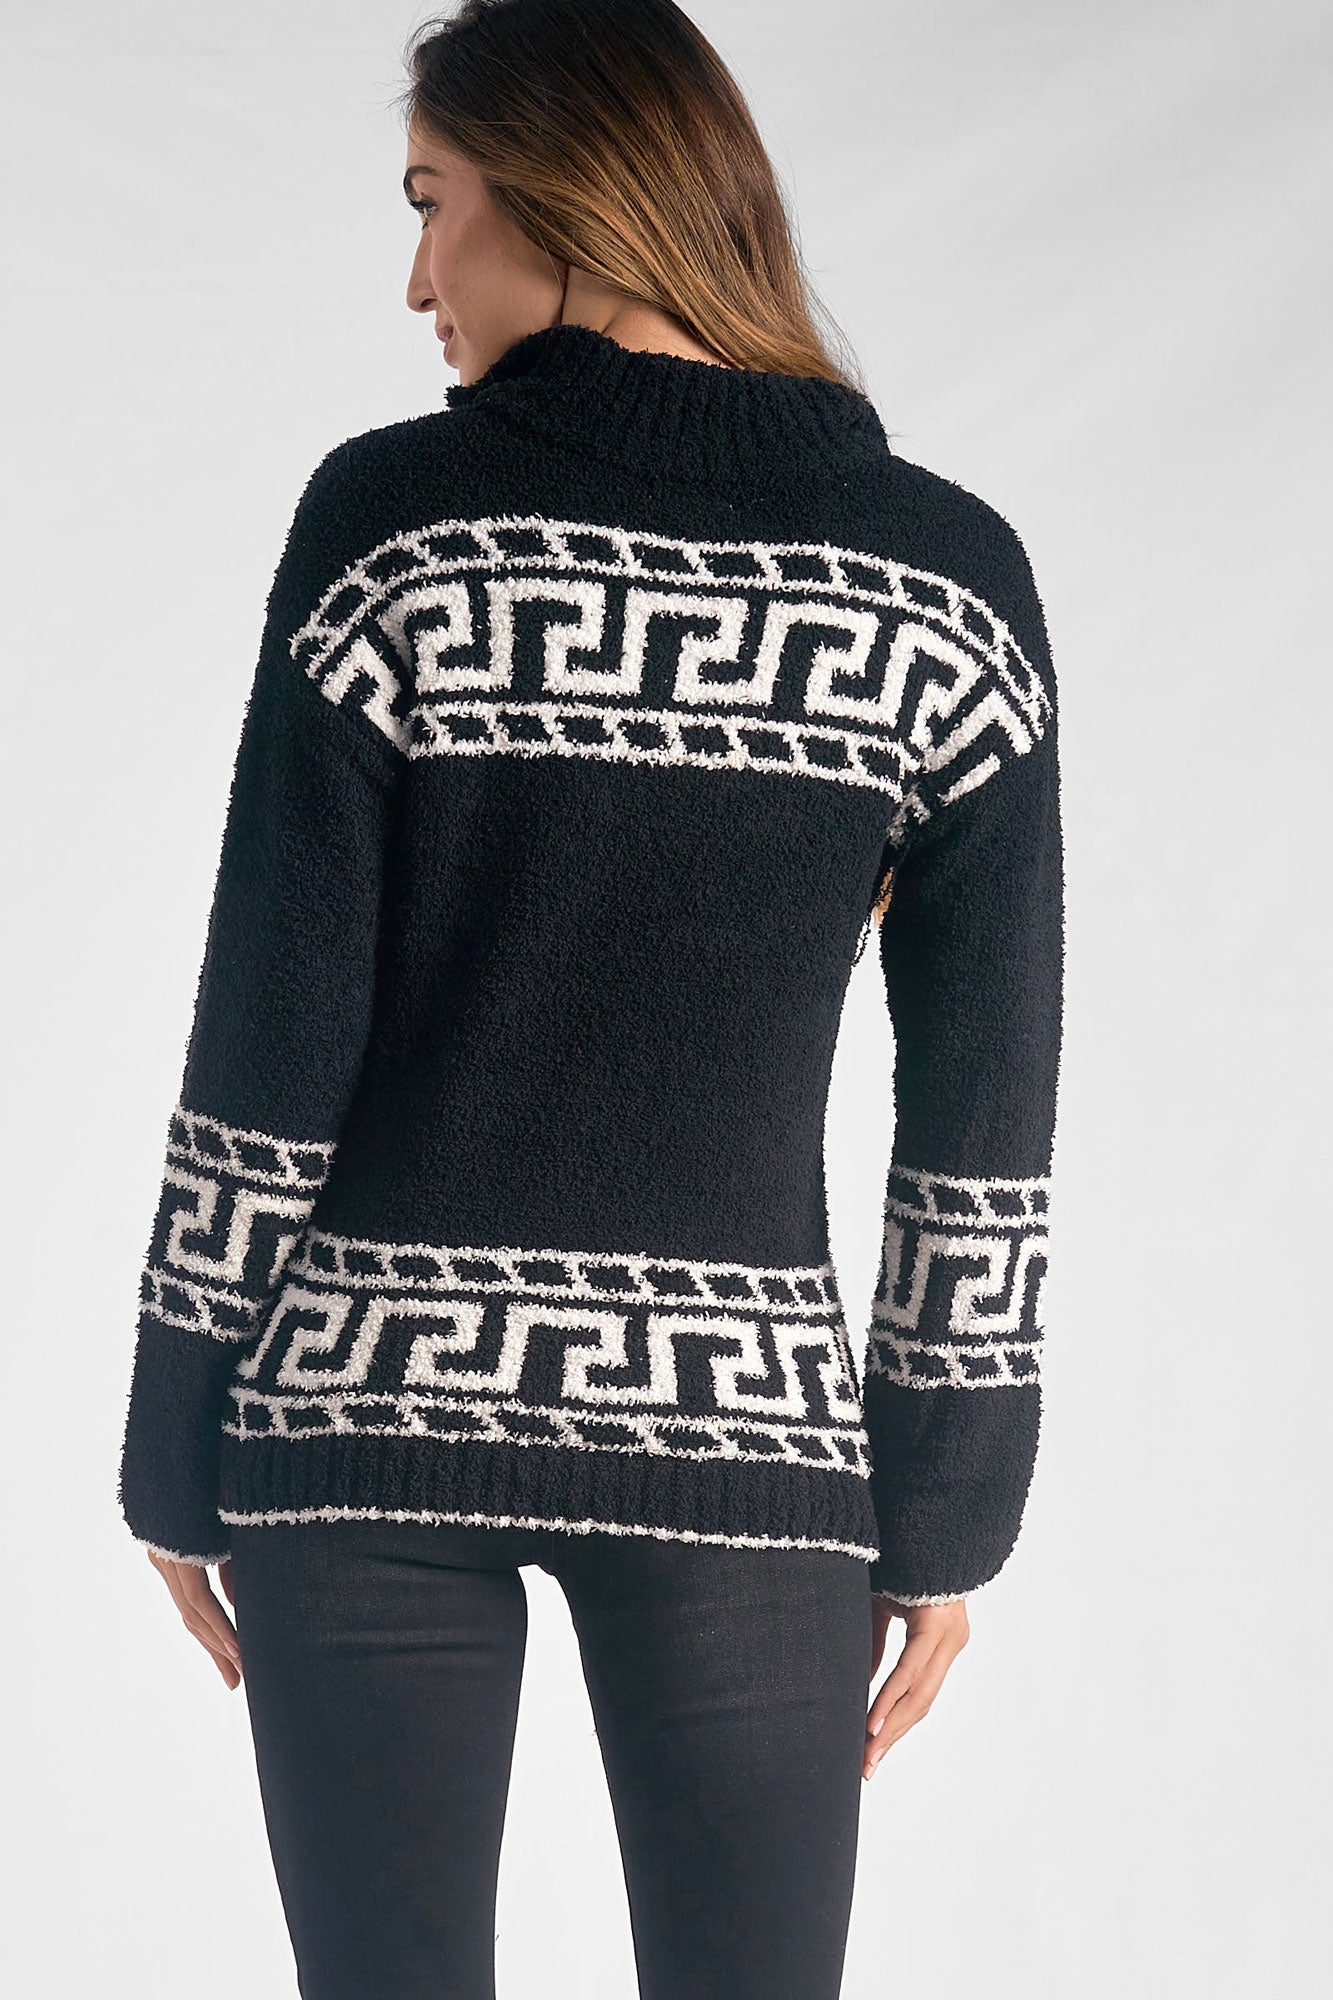 Blk/WHT half zipper sweater